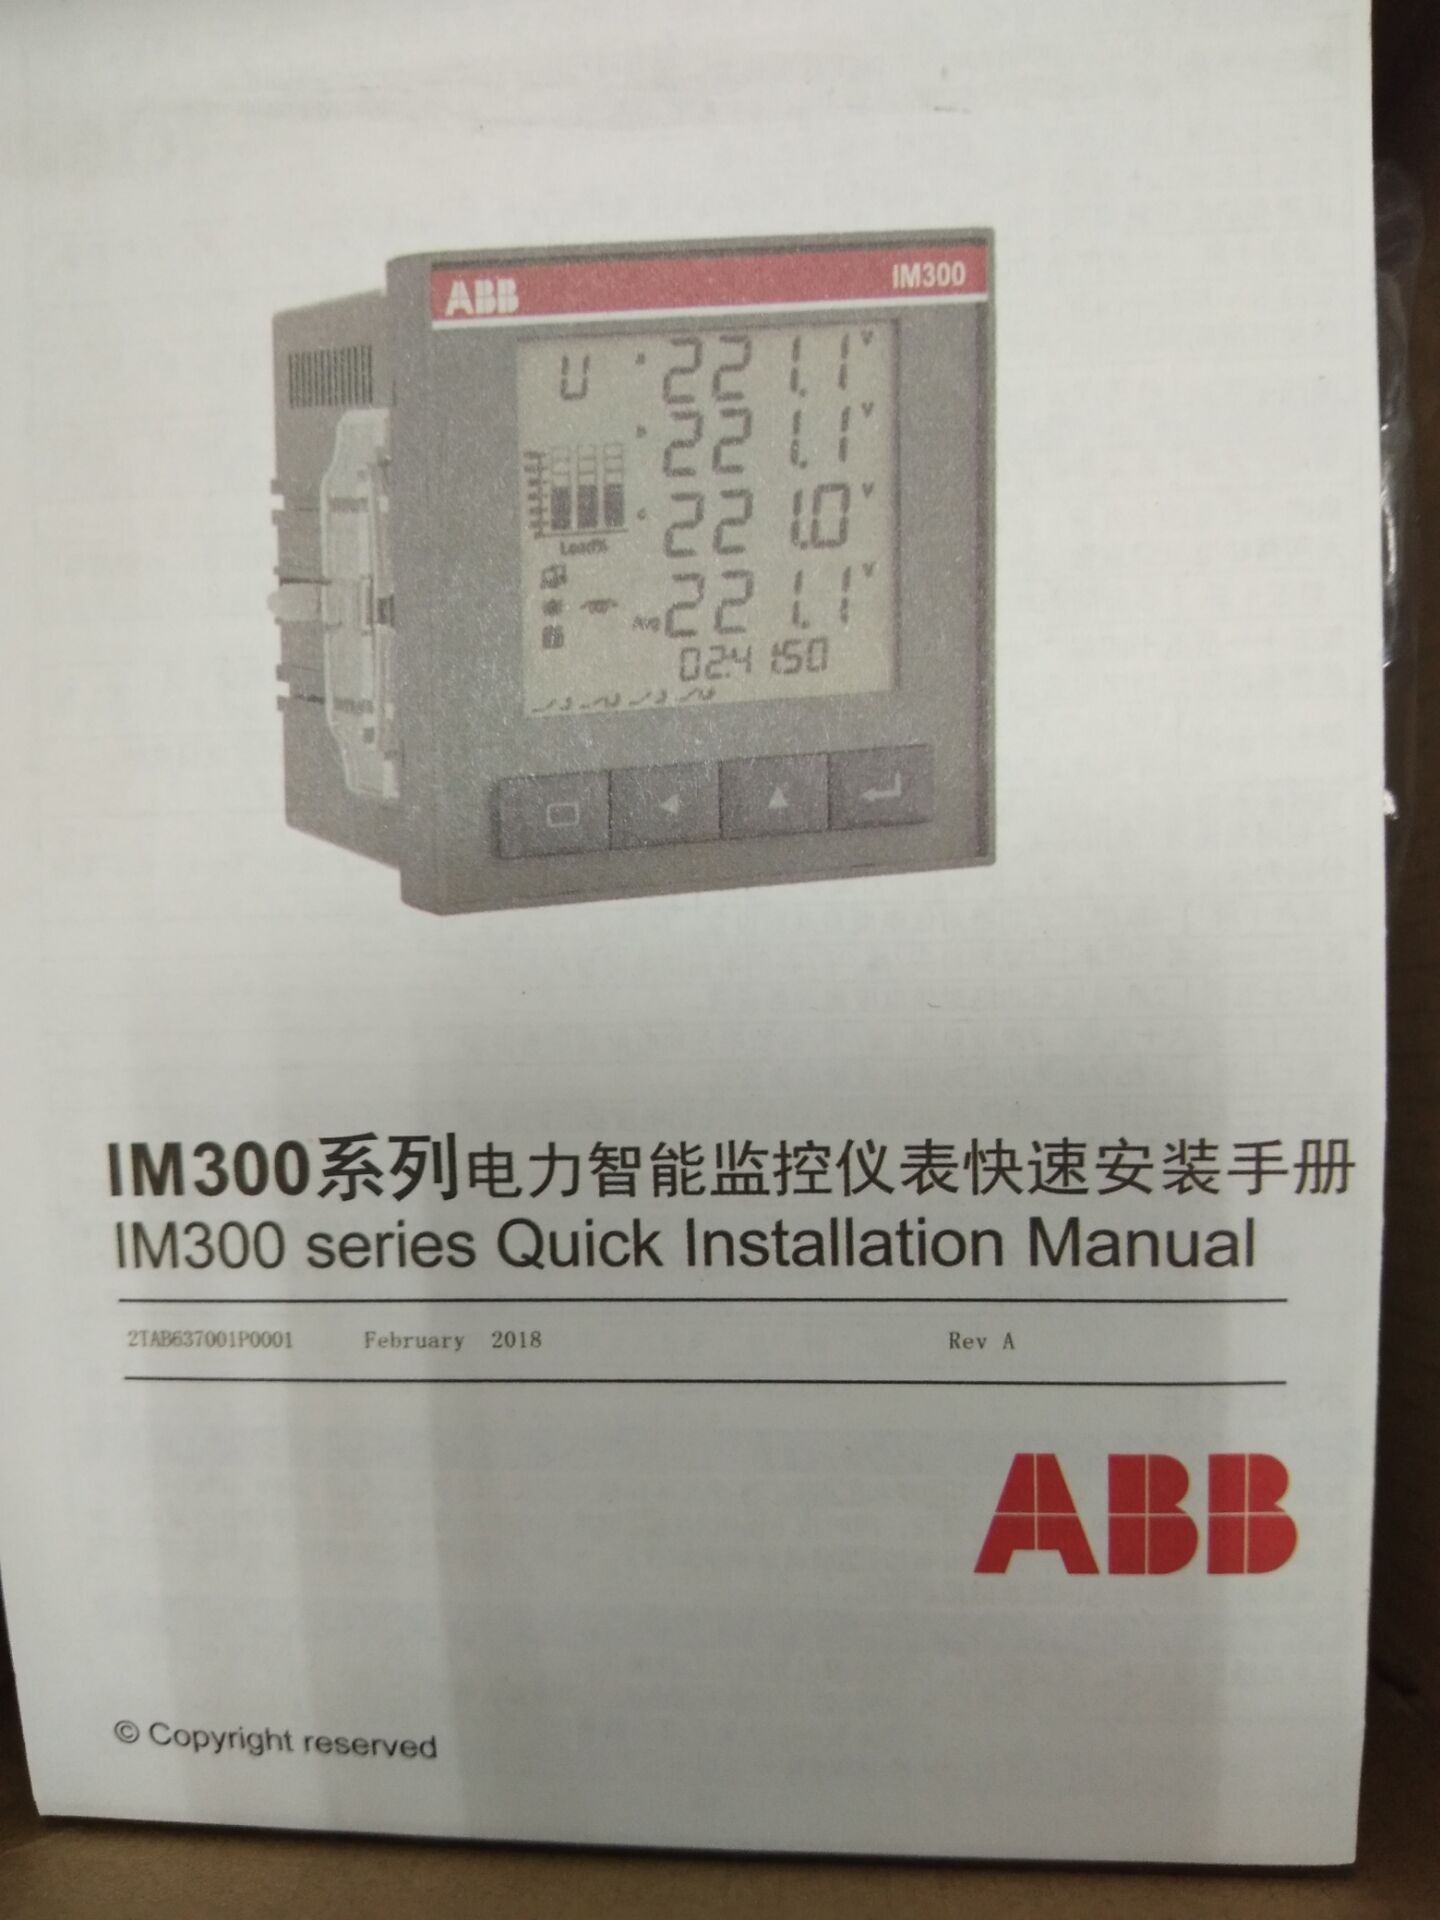 ABB 通信协议 PMC916 直接输入 : 0-220 V AC